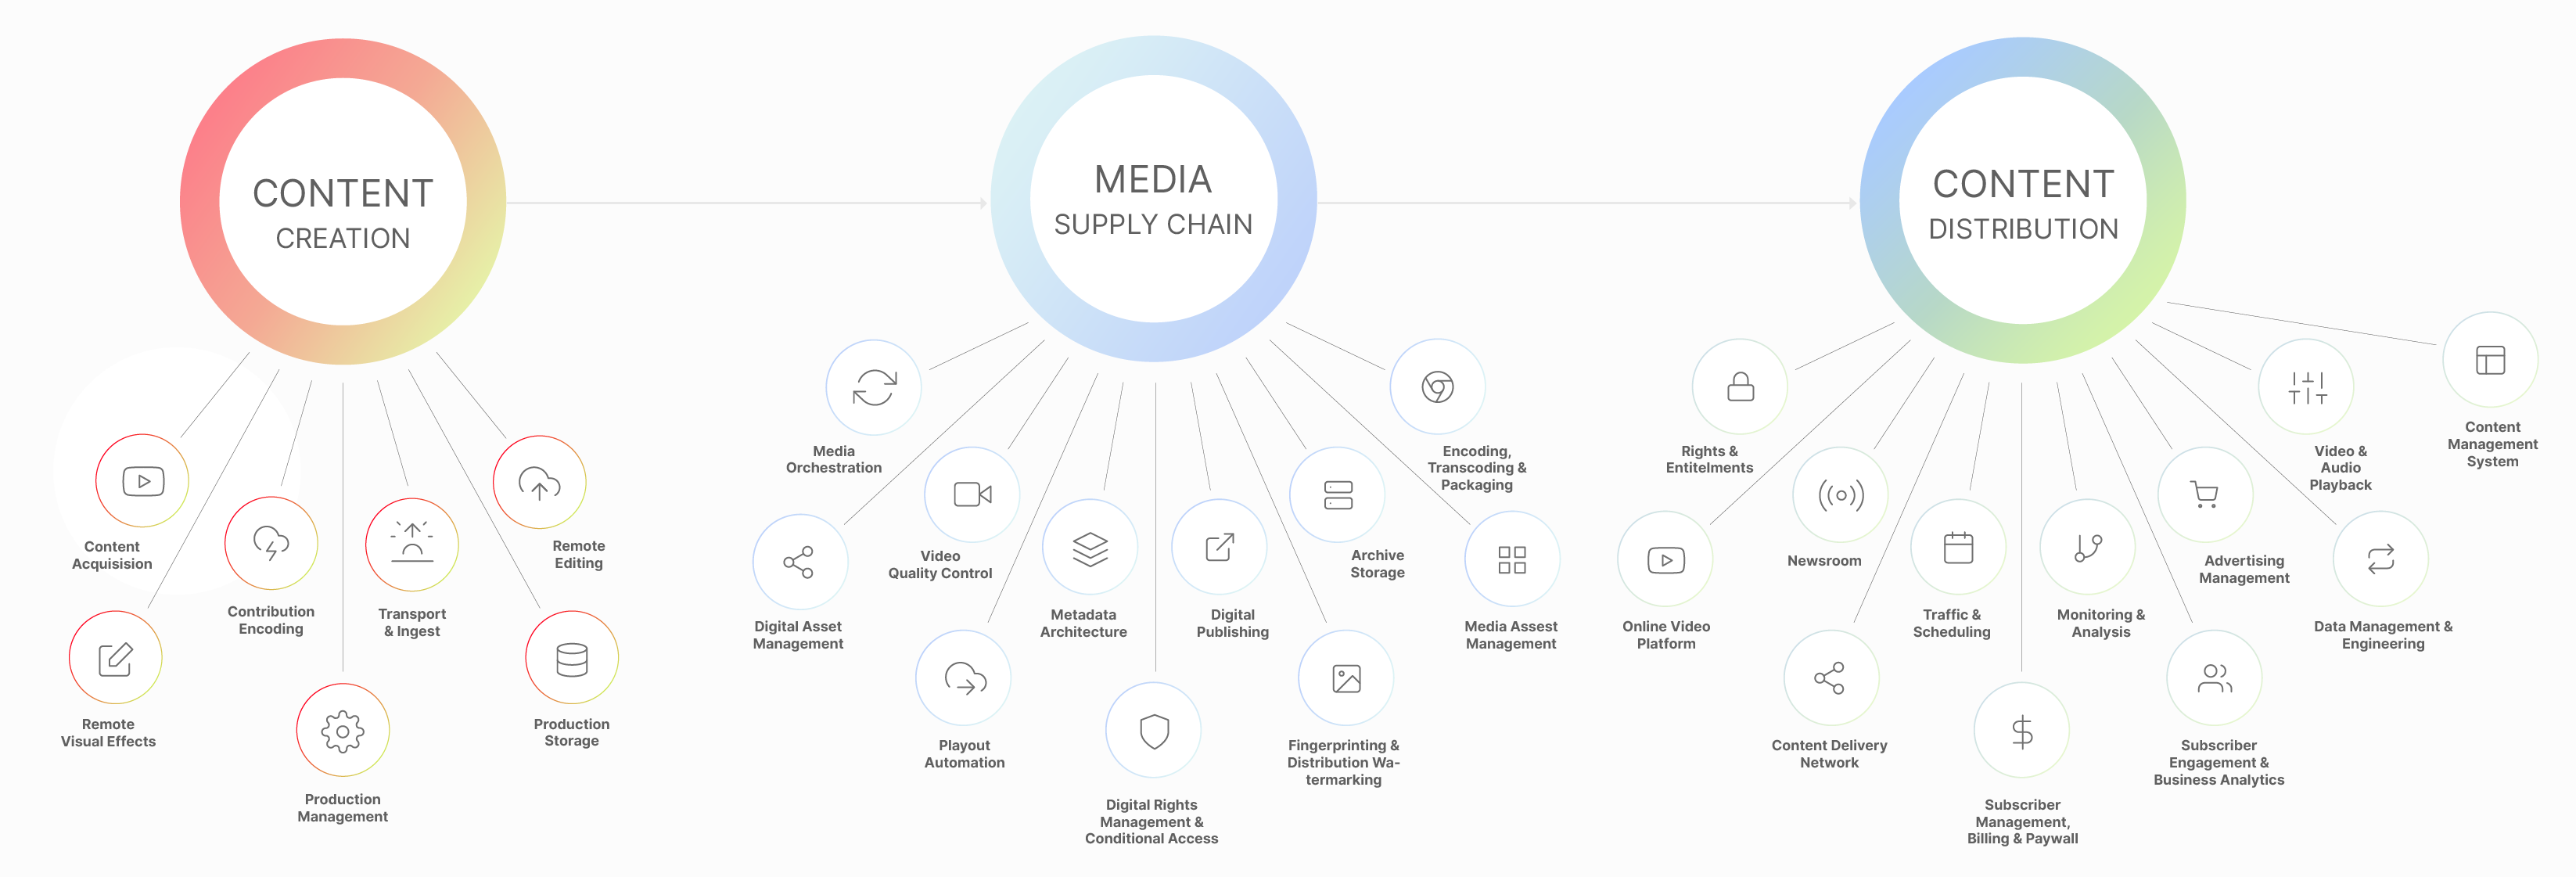 Media Supply Chain